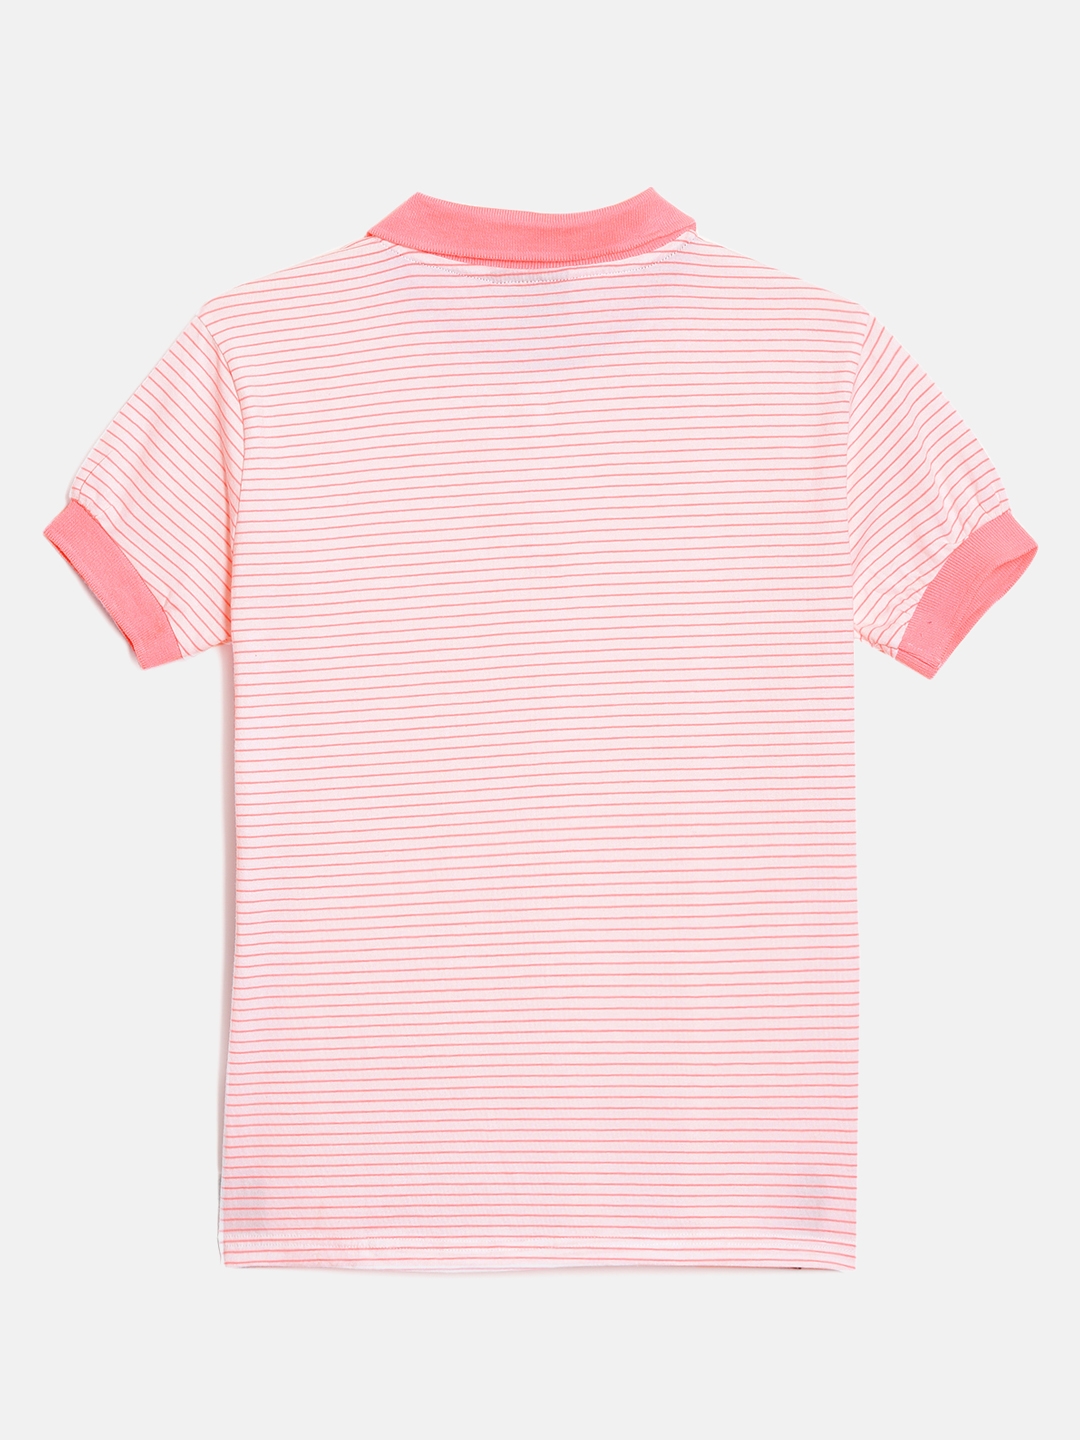 SEYBIL | Seybil Teen girls White cotton striped polo Tshirt 2